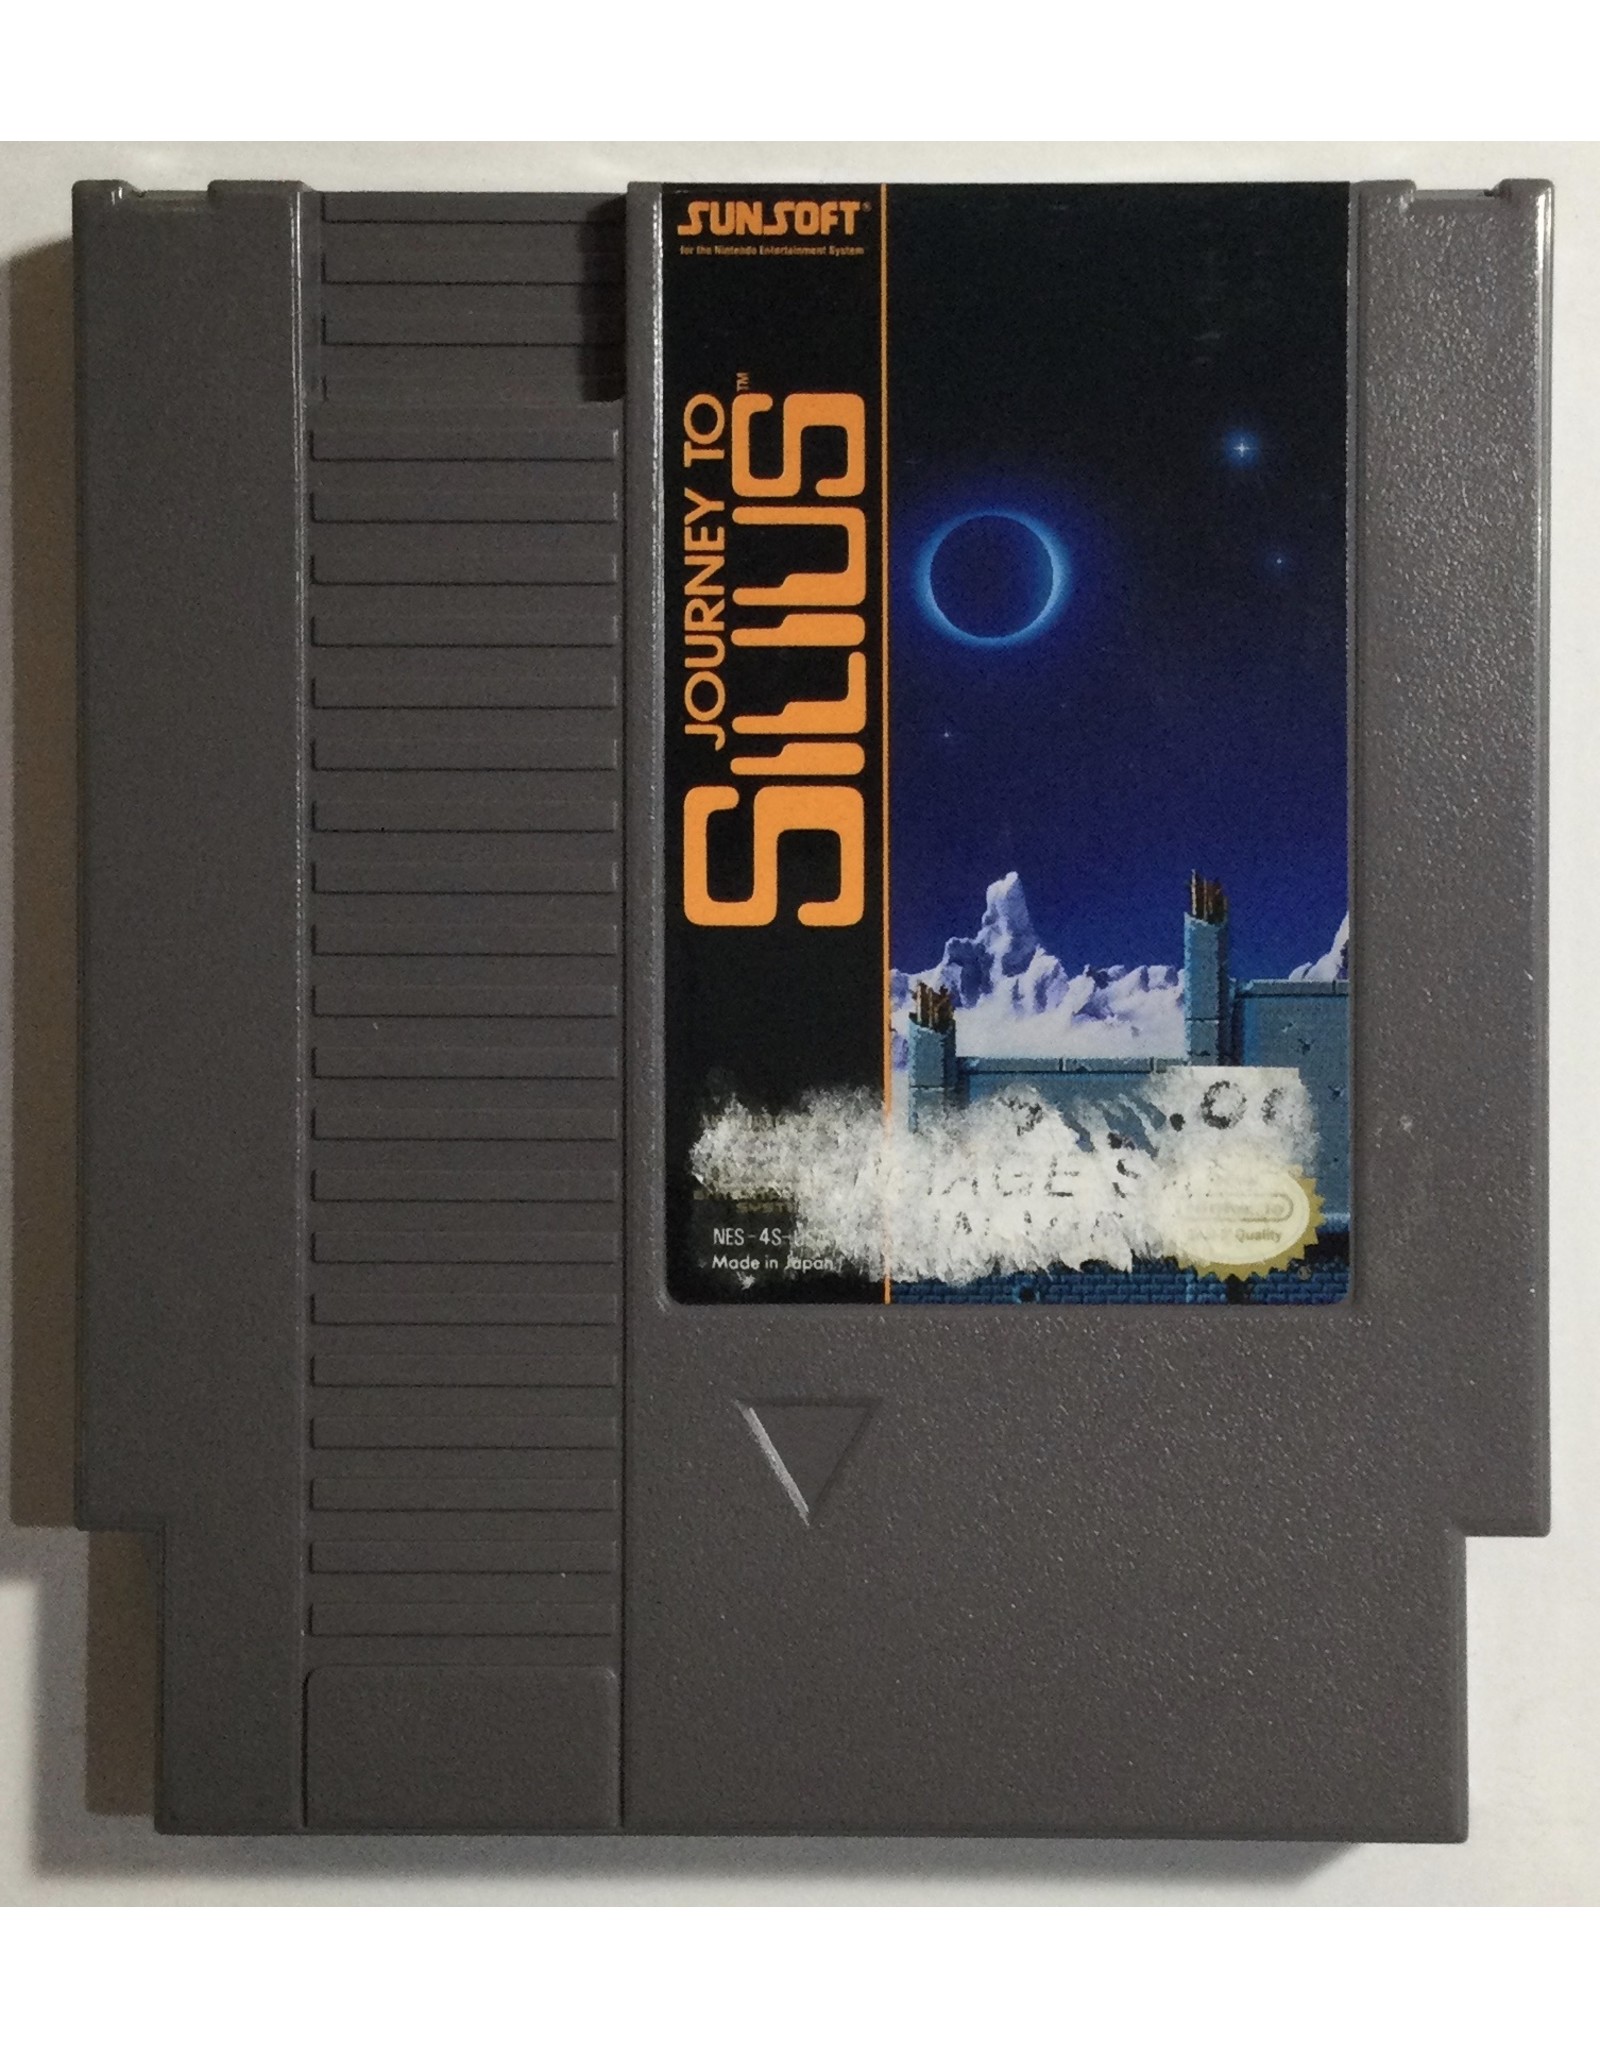 SUNSOFT Journey to Silius for Nintendo Entertainment system (NES)